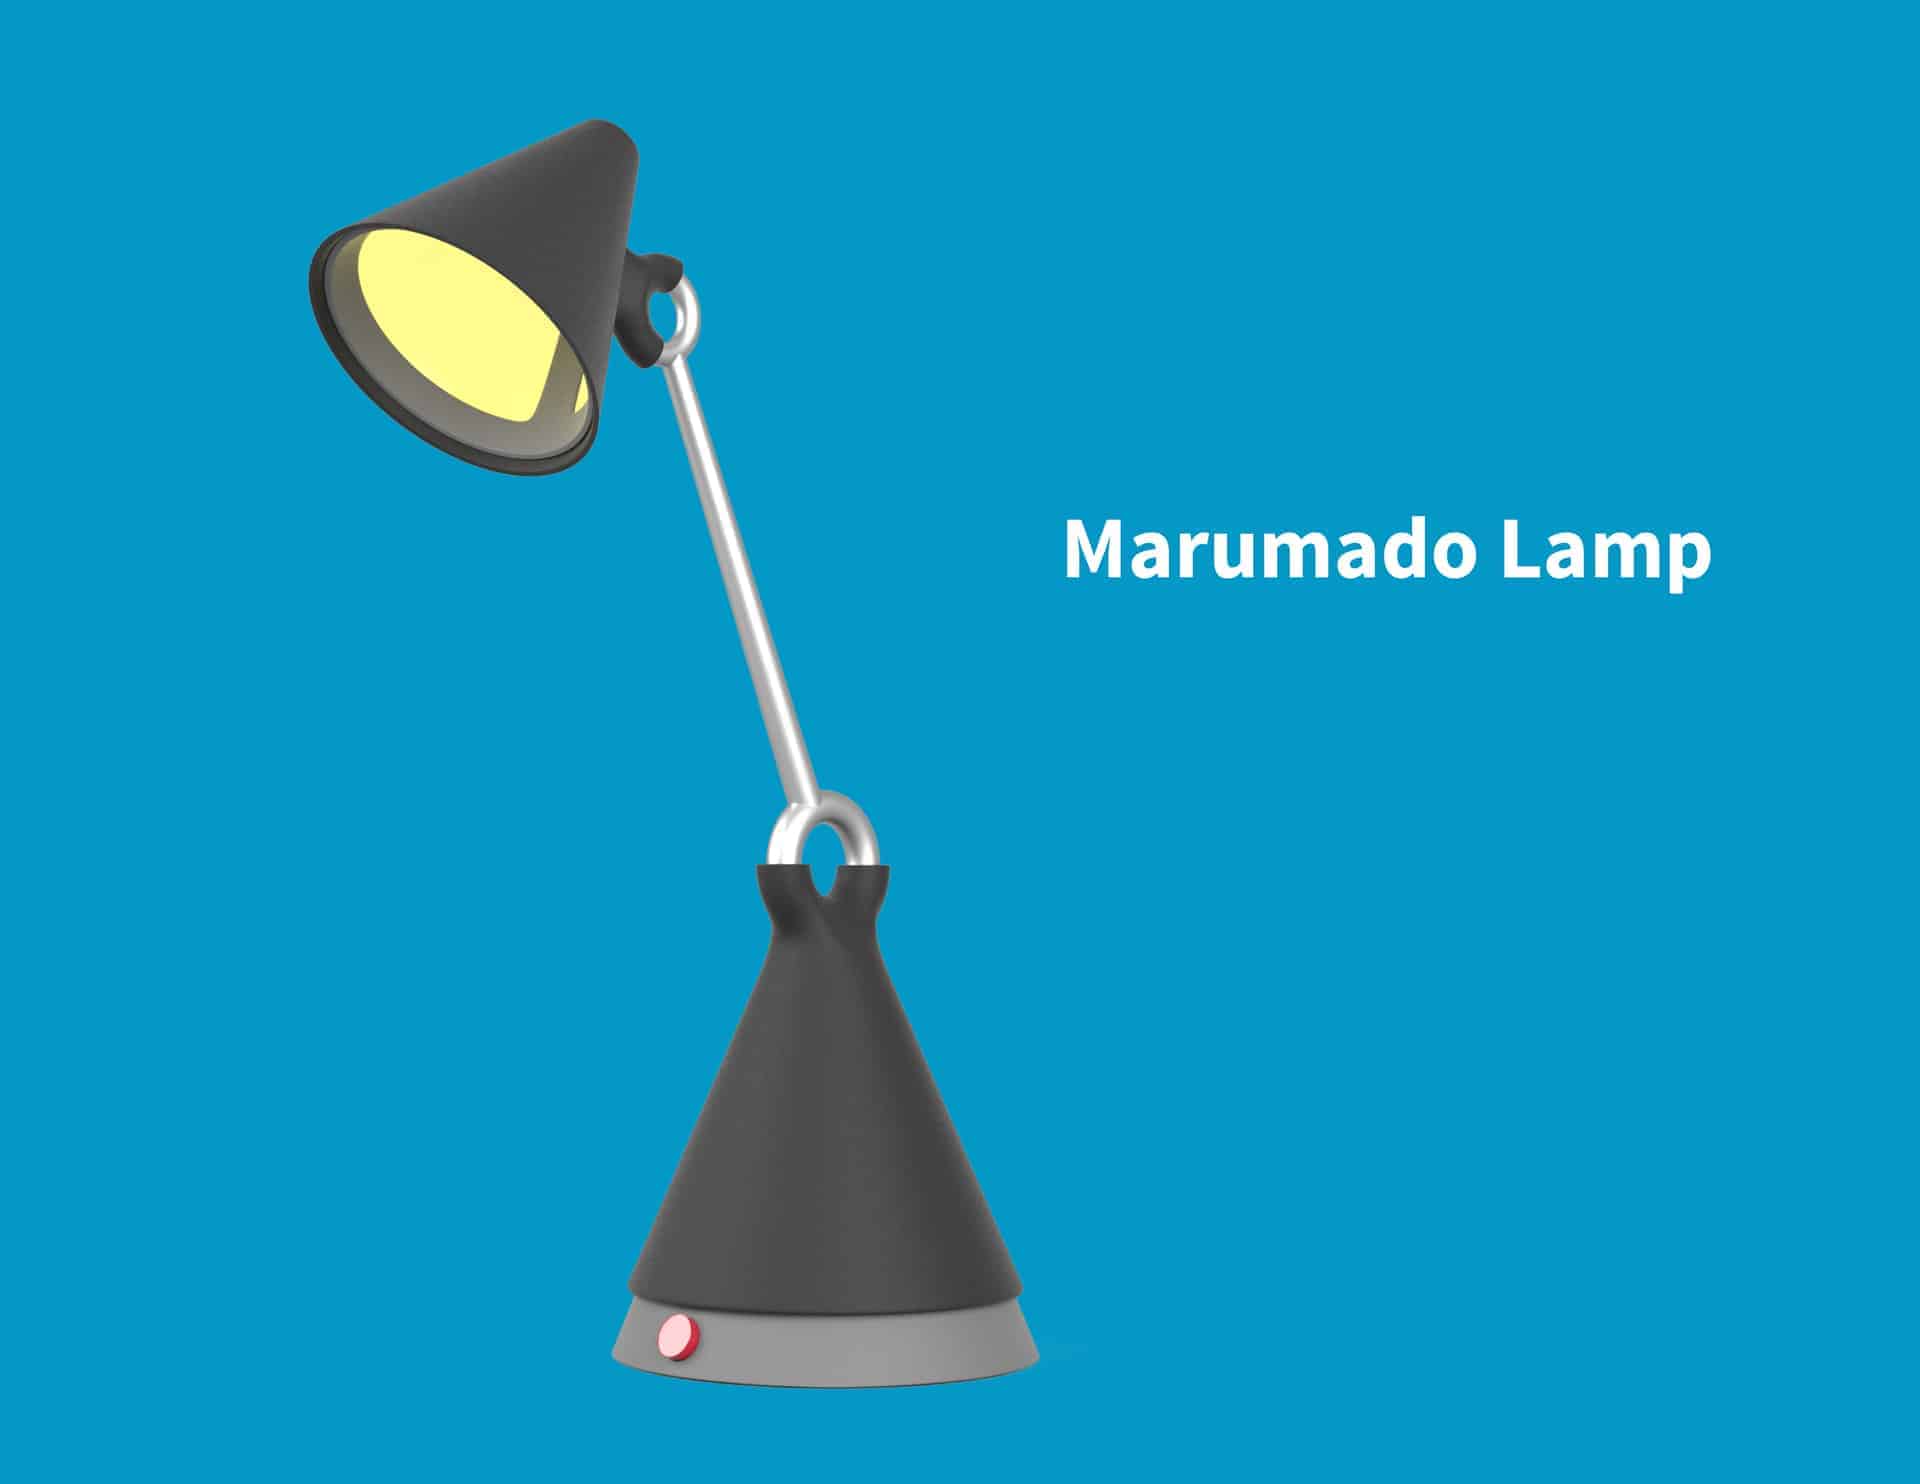 Marumado Lamp